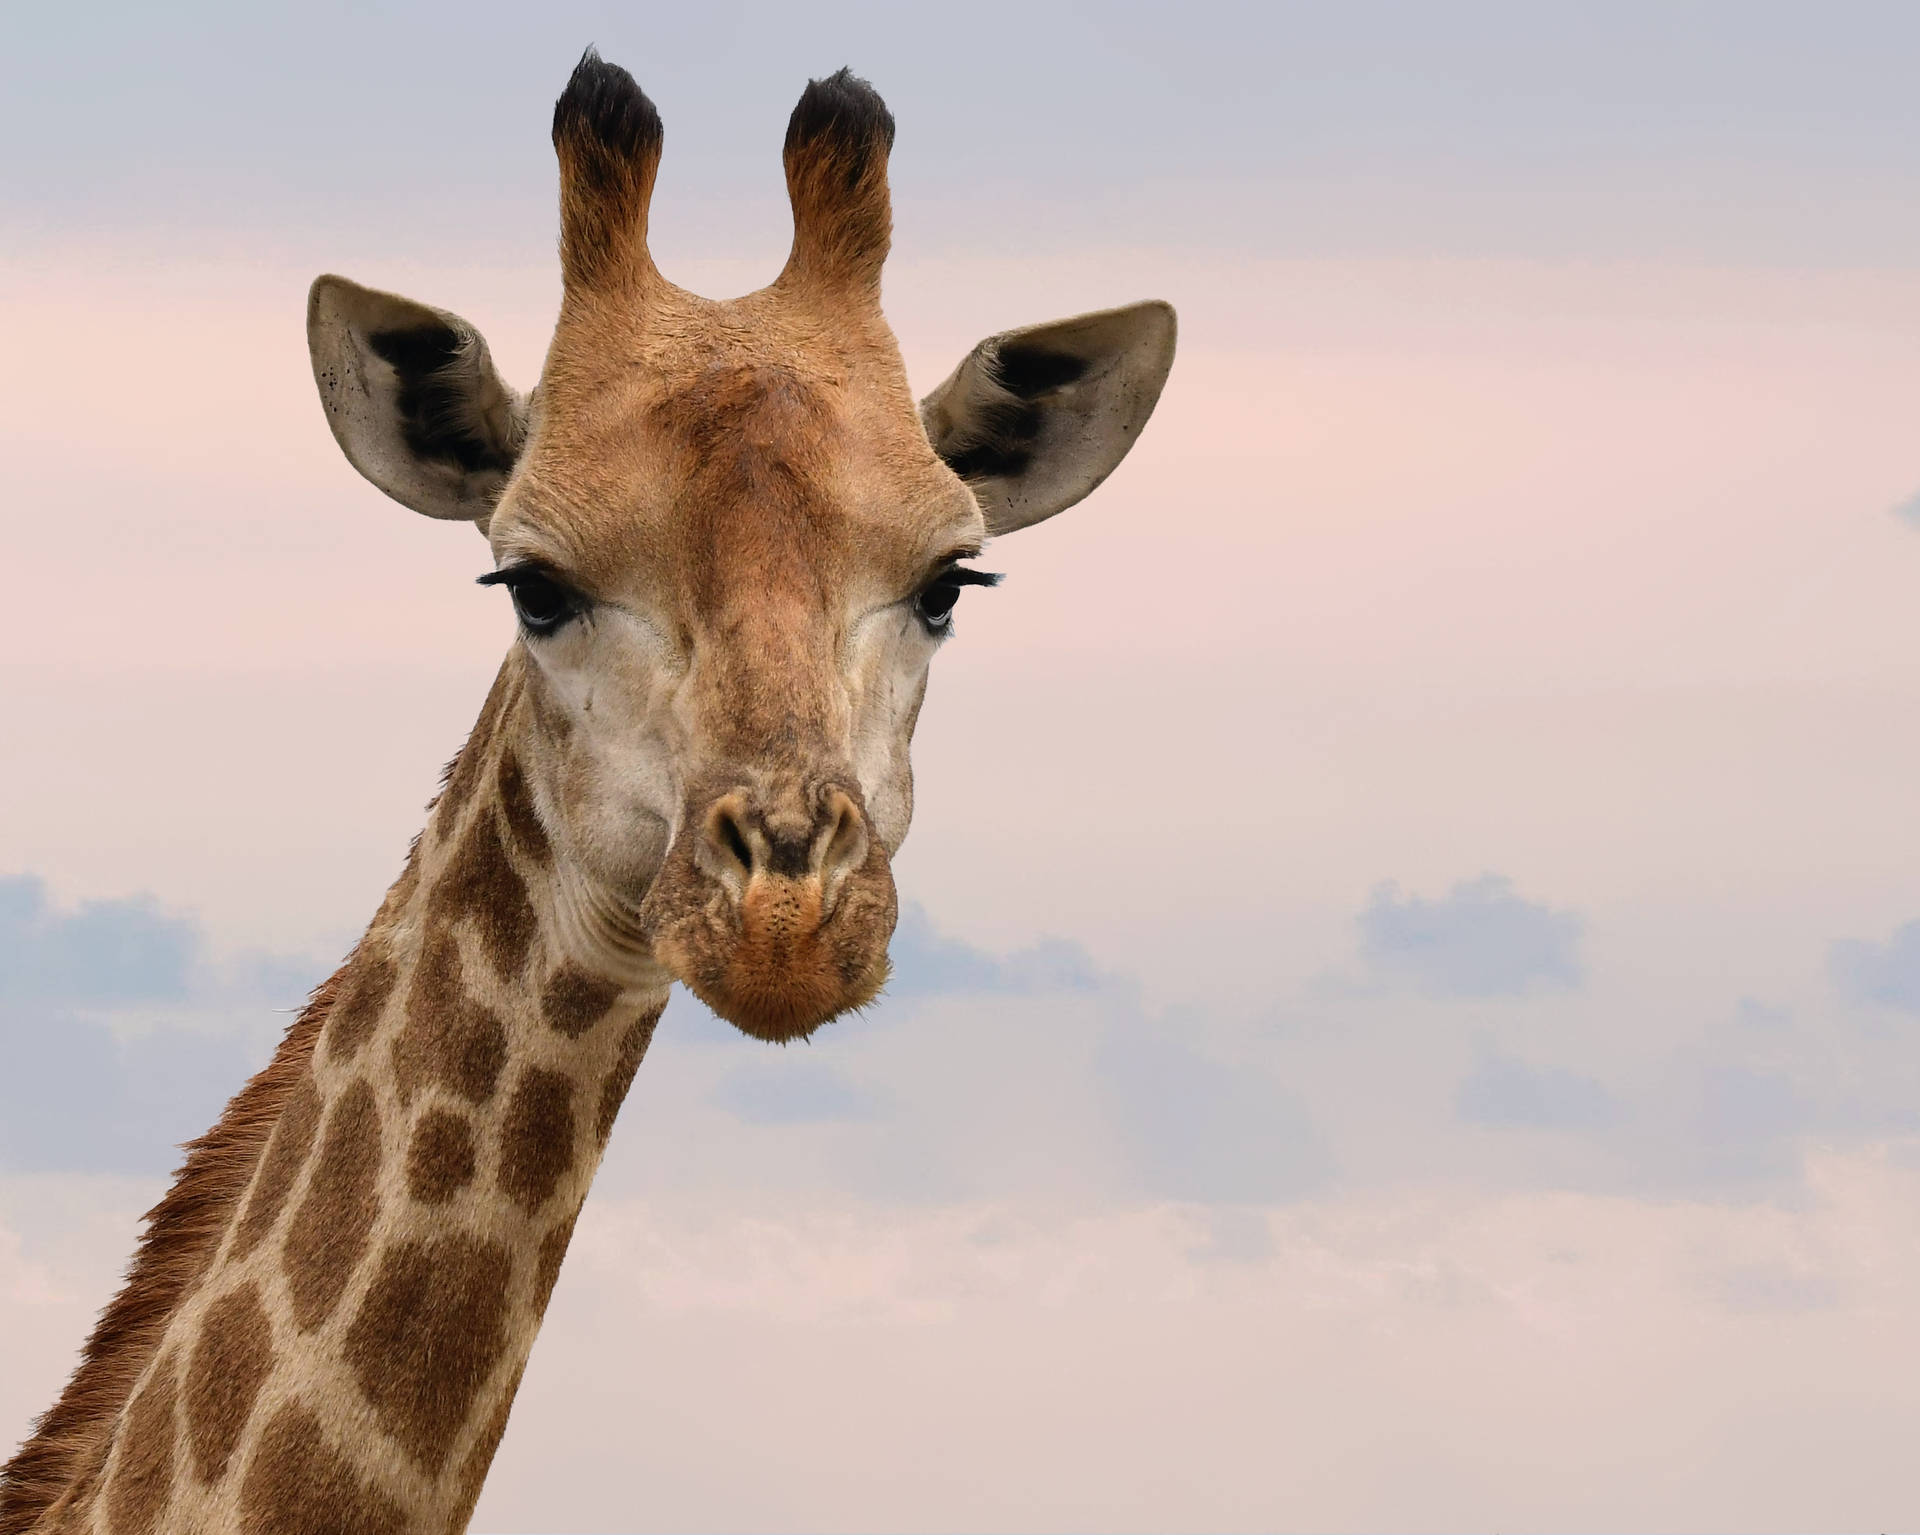 Cute Animal Giraffe Face Wallpaper